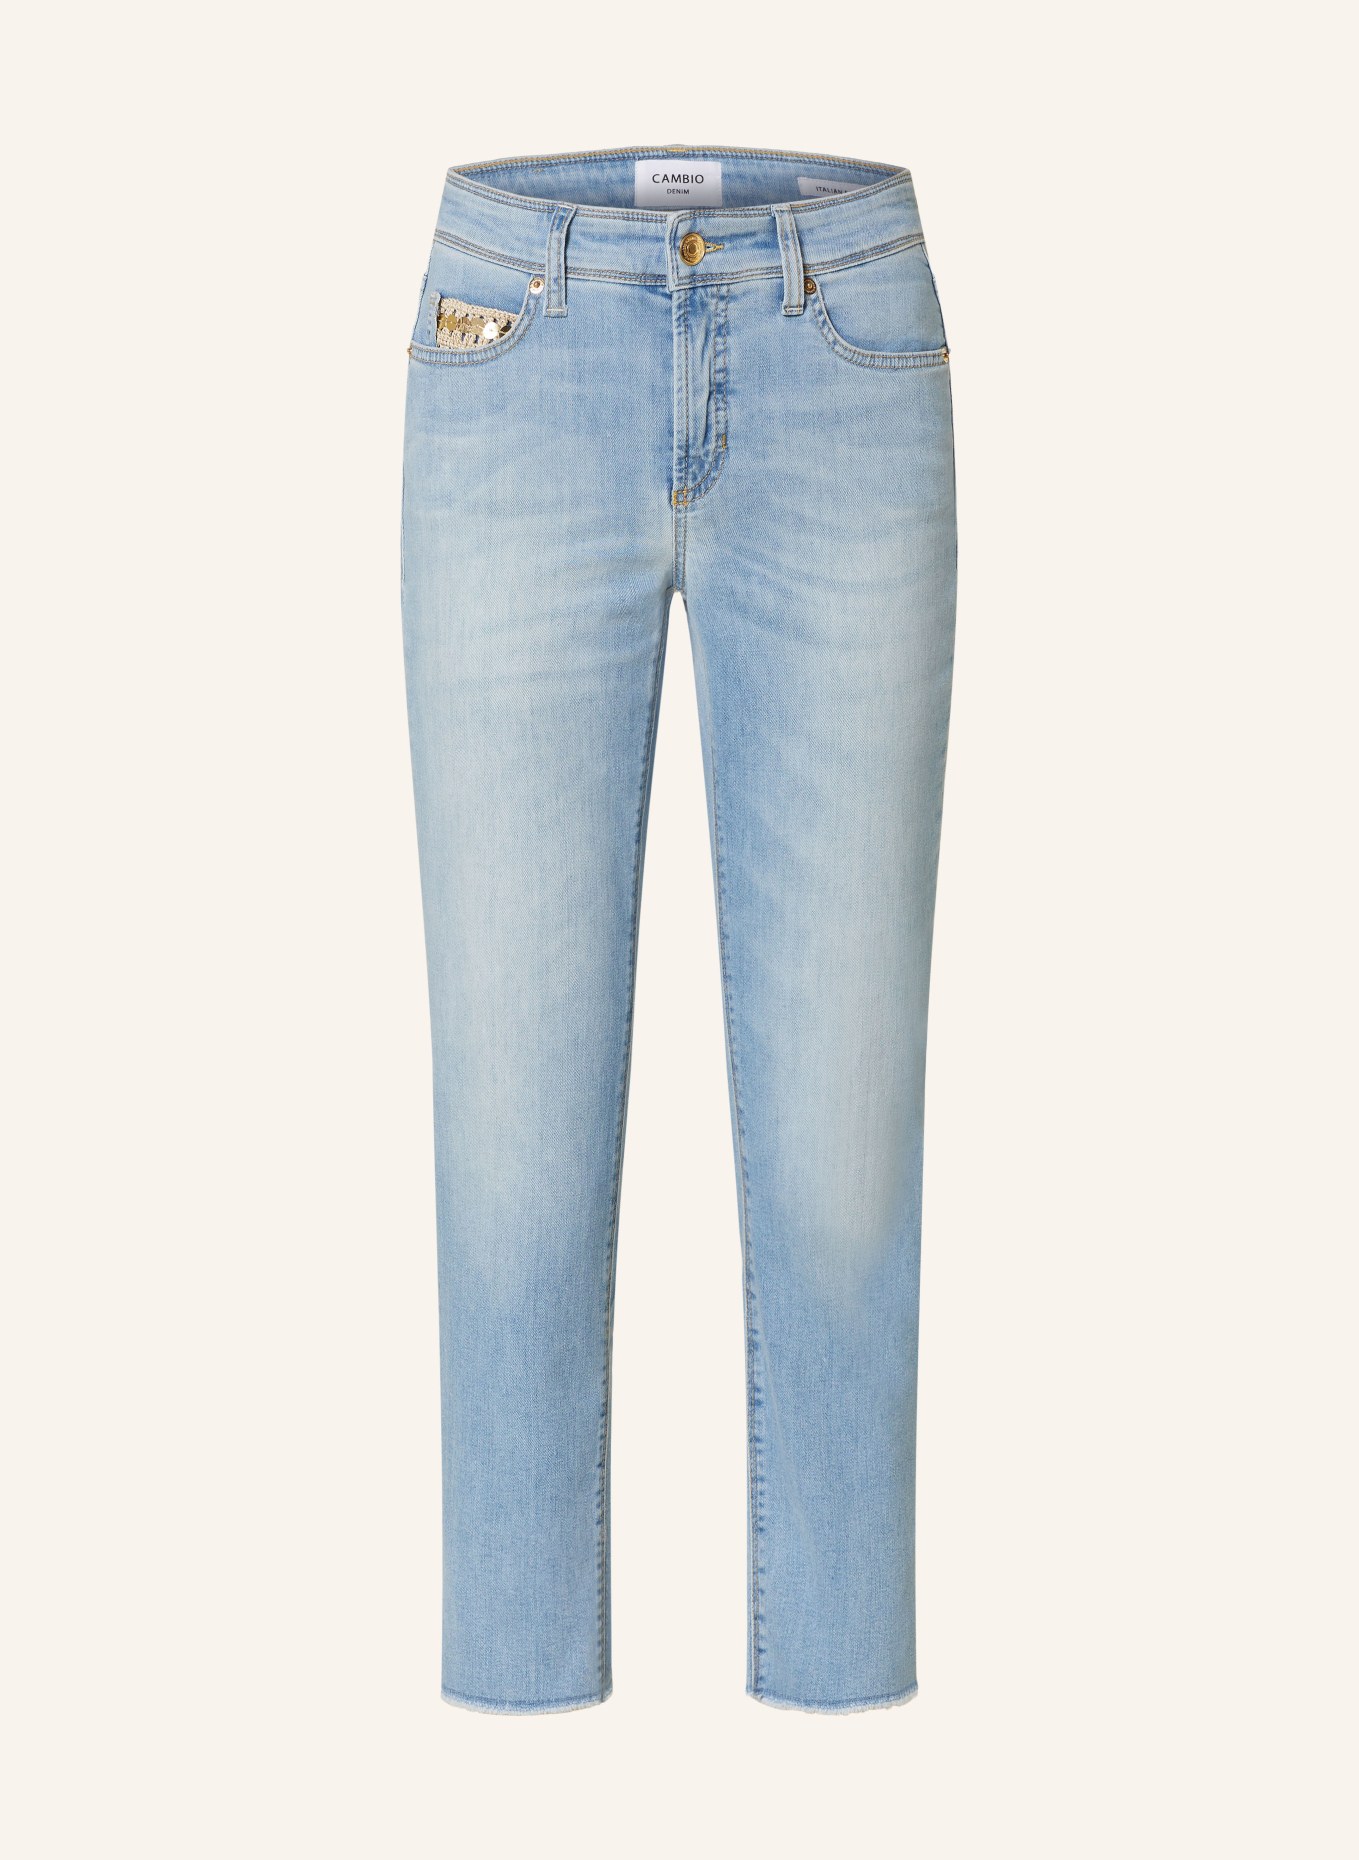 CAMBIO 7/8-Jeans PIPER, Farbe: 5150 summer super bleach fring (Bild 1)